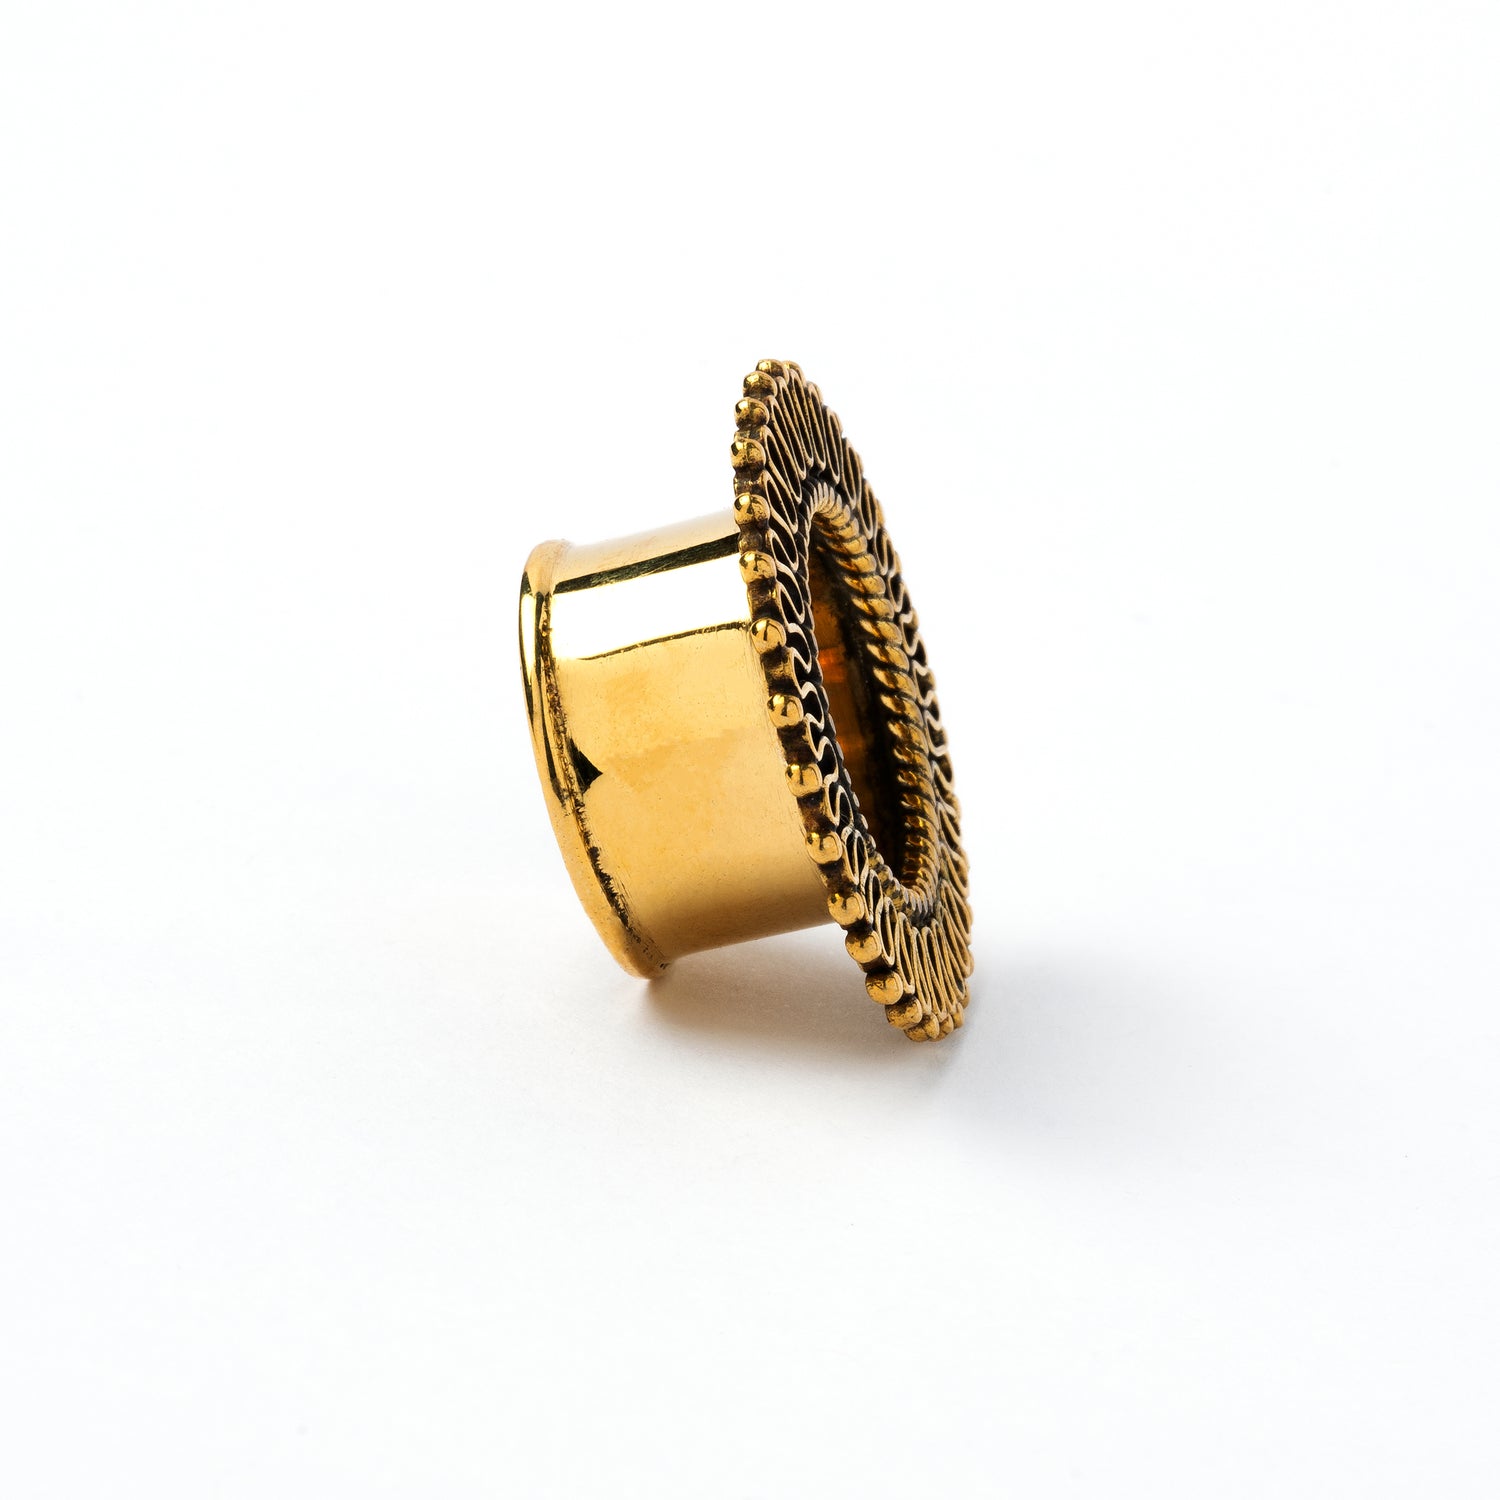 single golden brass filigree ear tunnel right side view